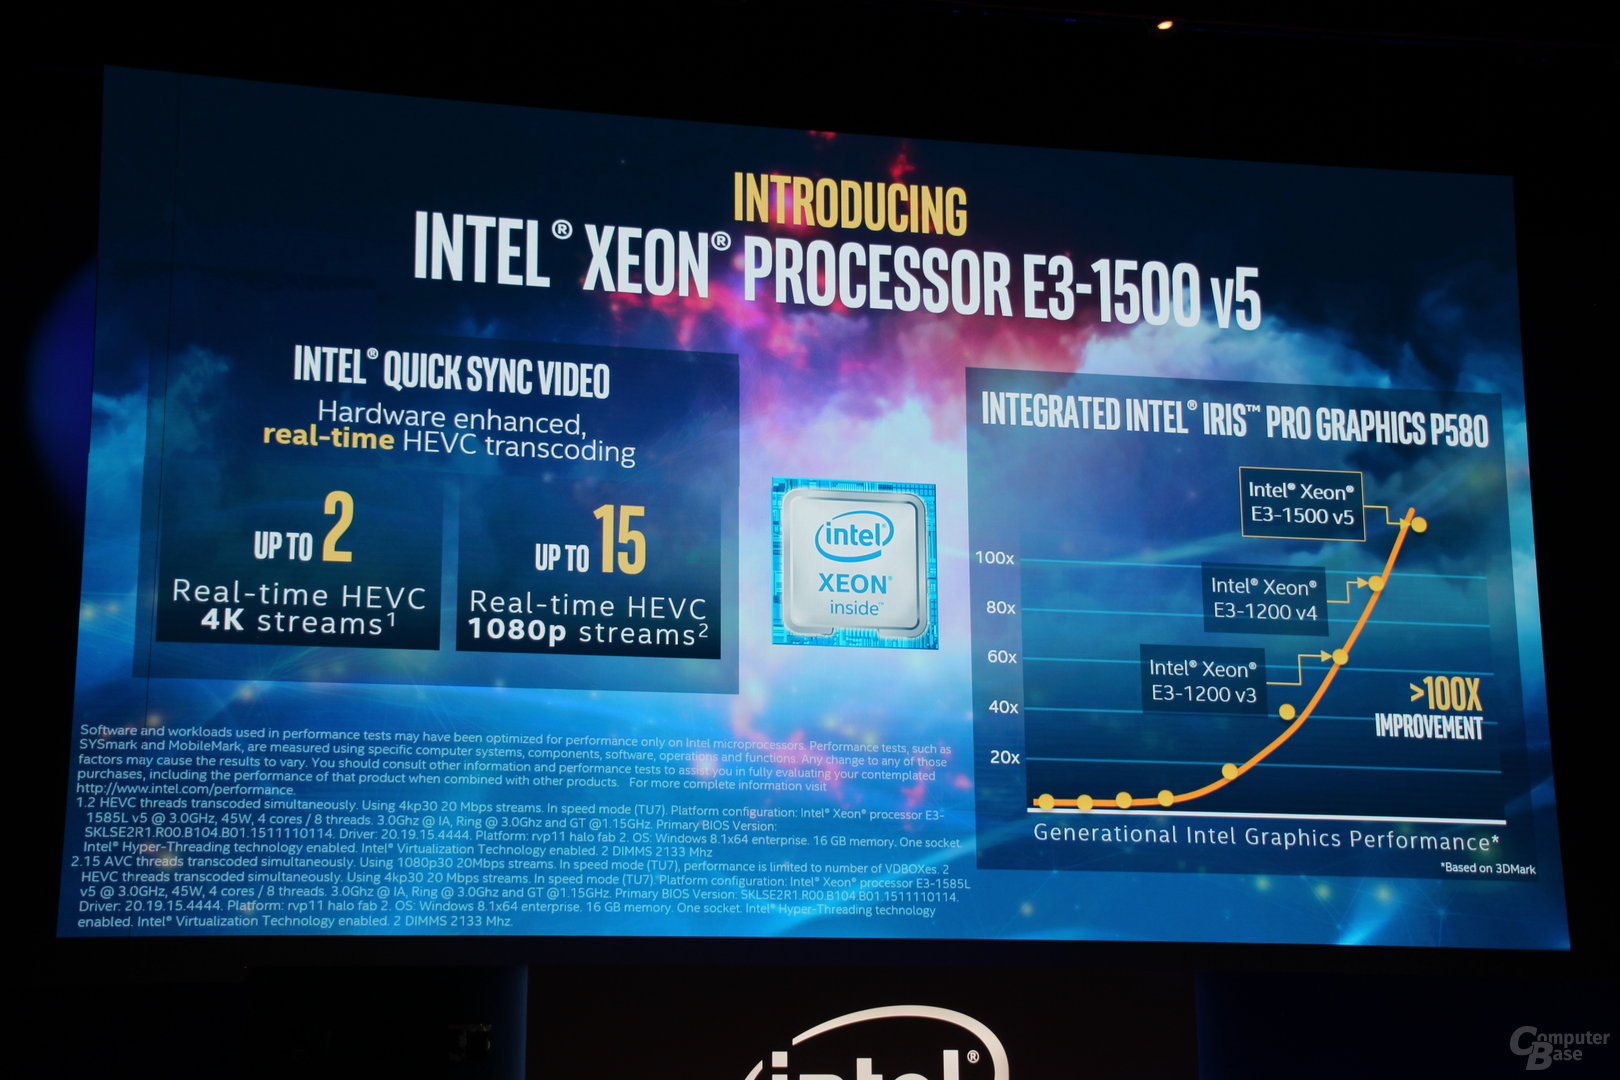 Intel Xeon E3-1500 v5